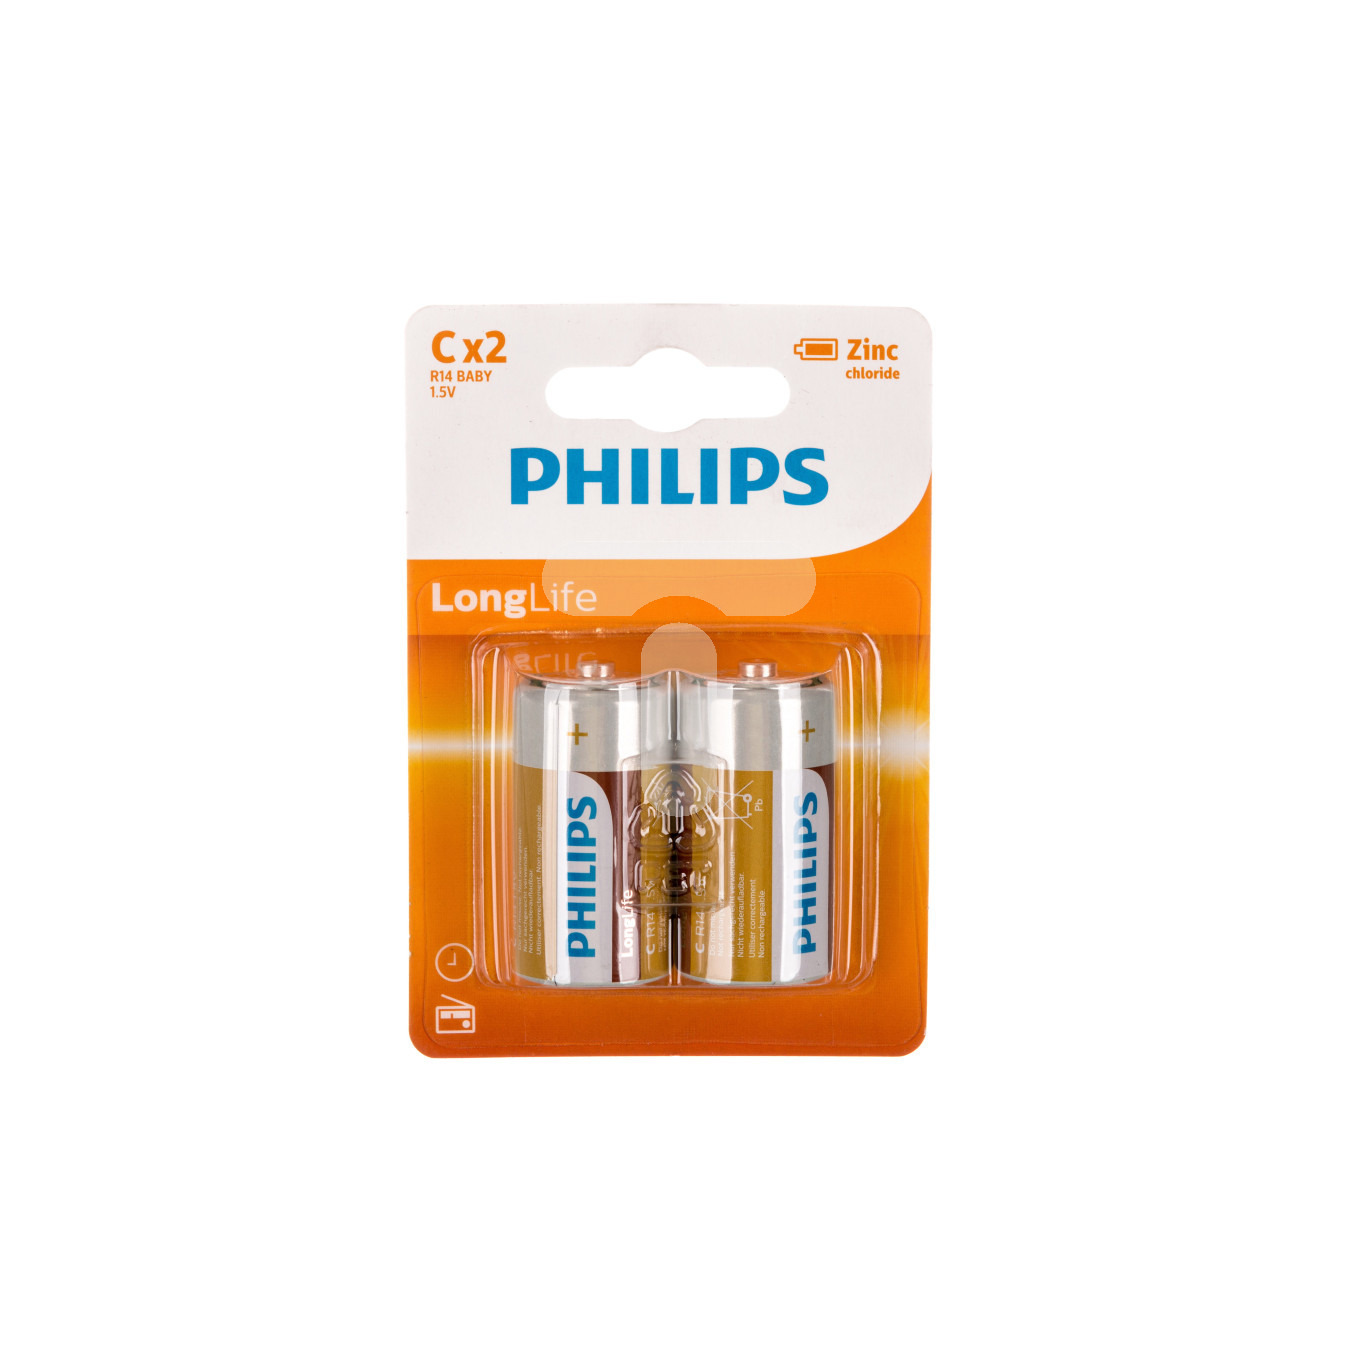 2x Philips Long Life batterijen LR14 C 1,5 V